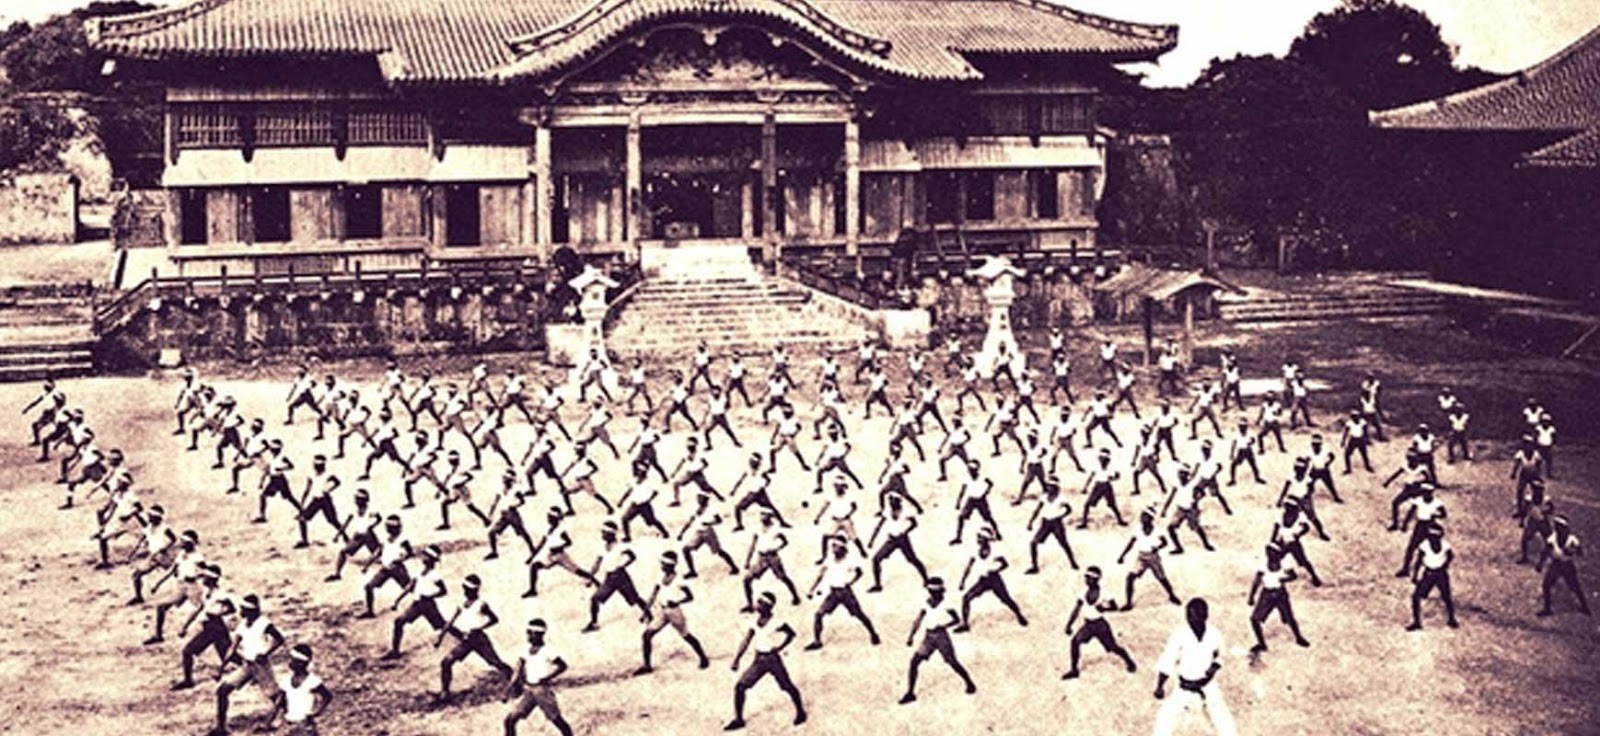 History of Taekwondo